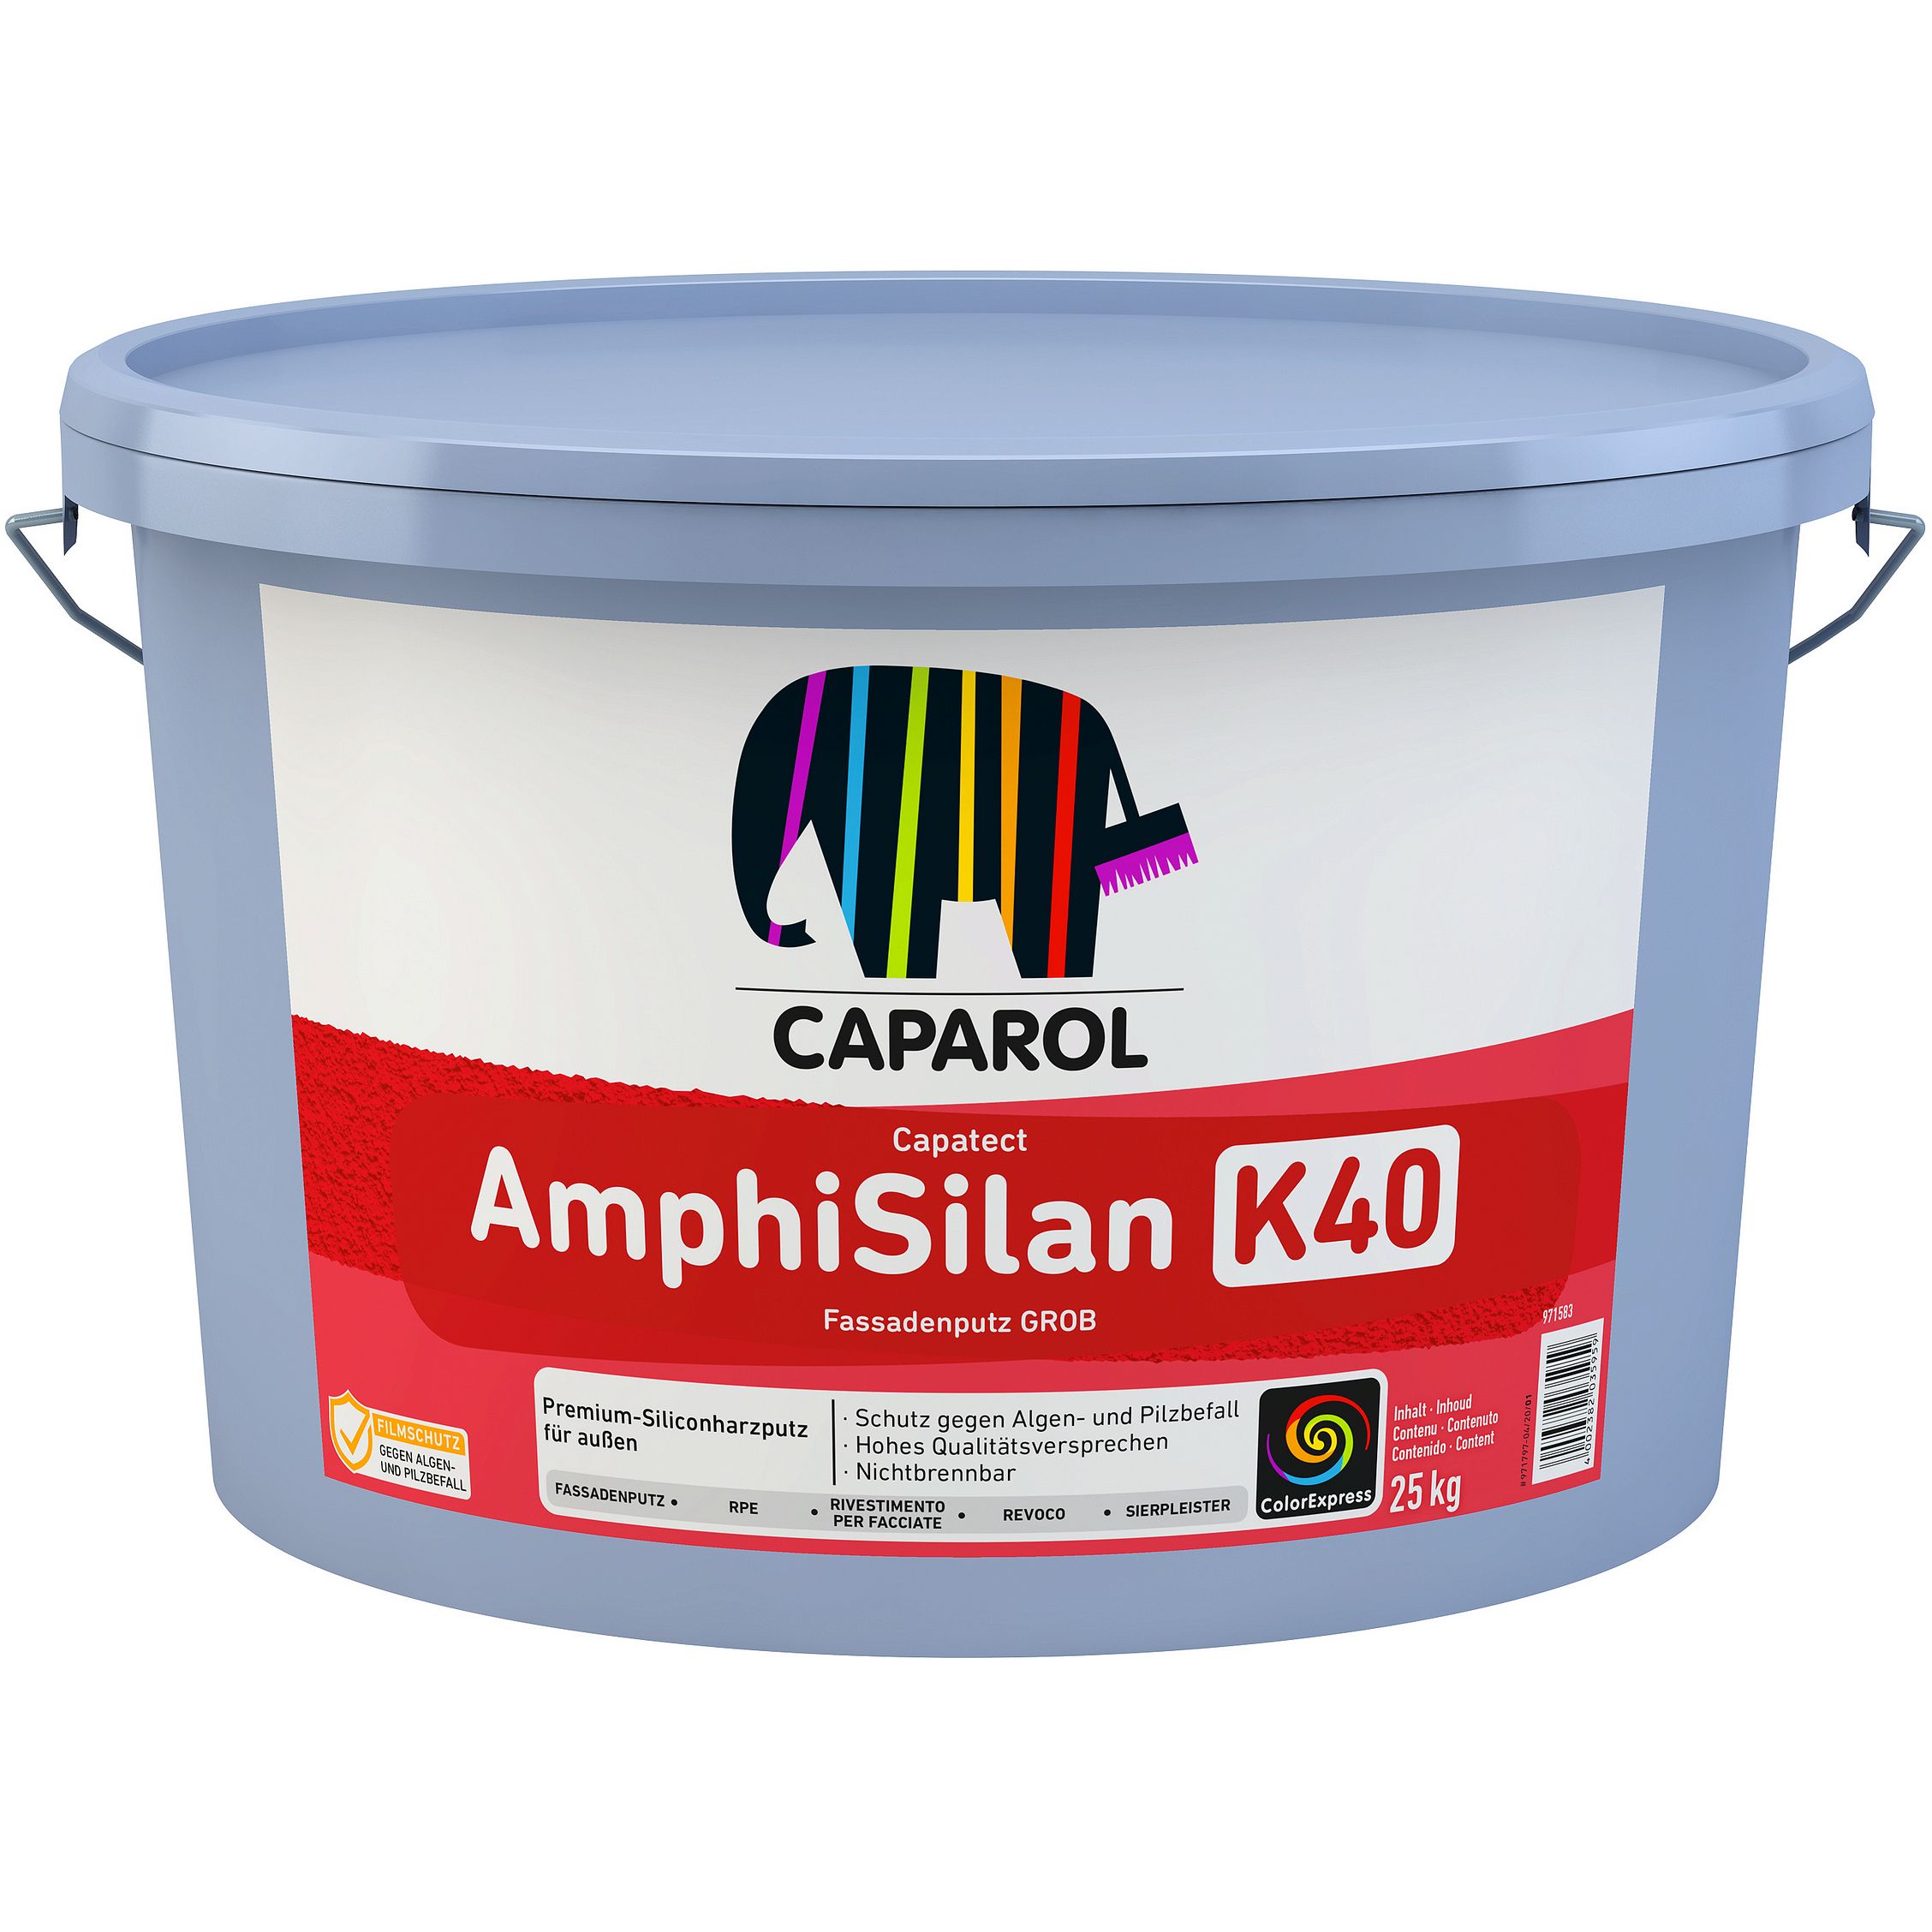 Caparol AmphiSilan Fassadenputz GROB - K40 - 25 kg